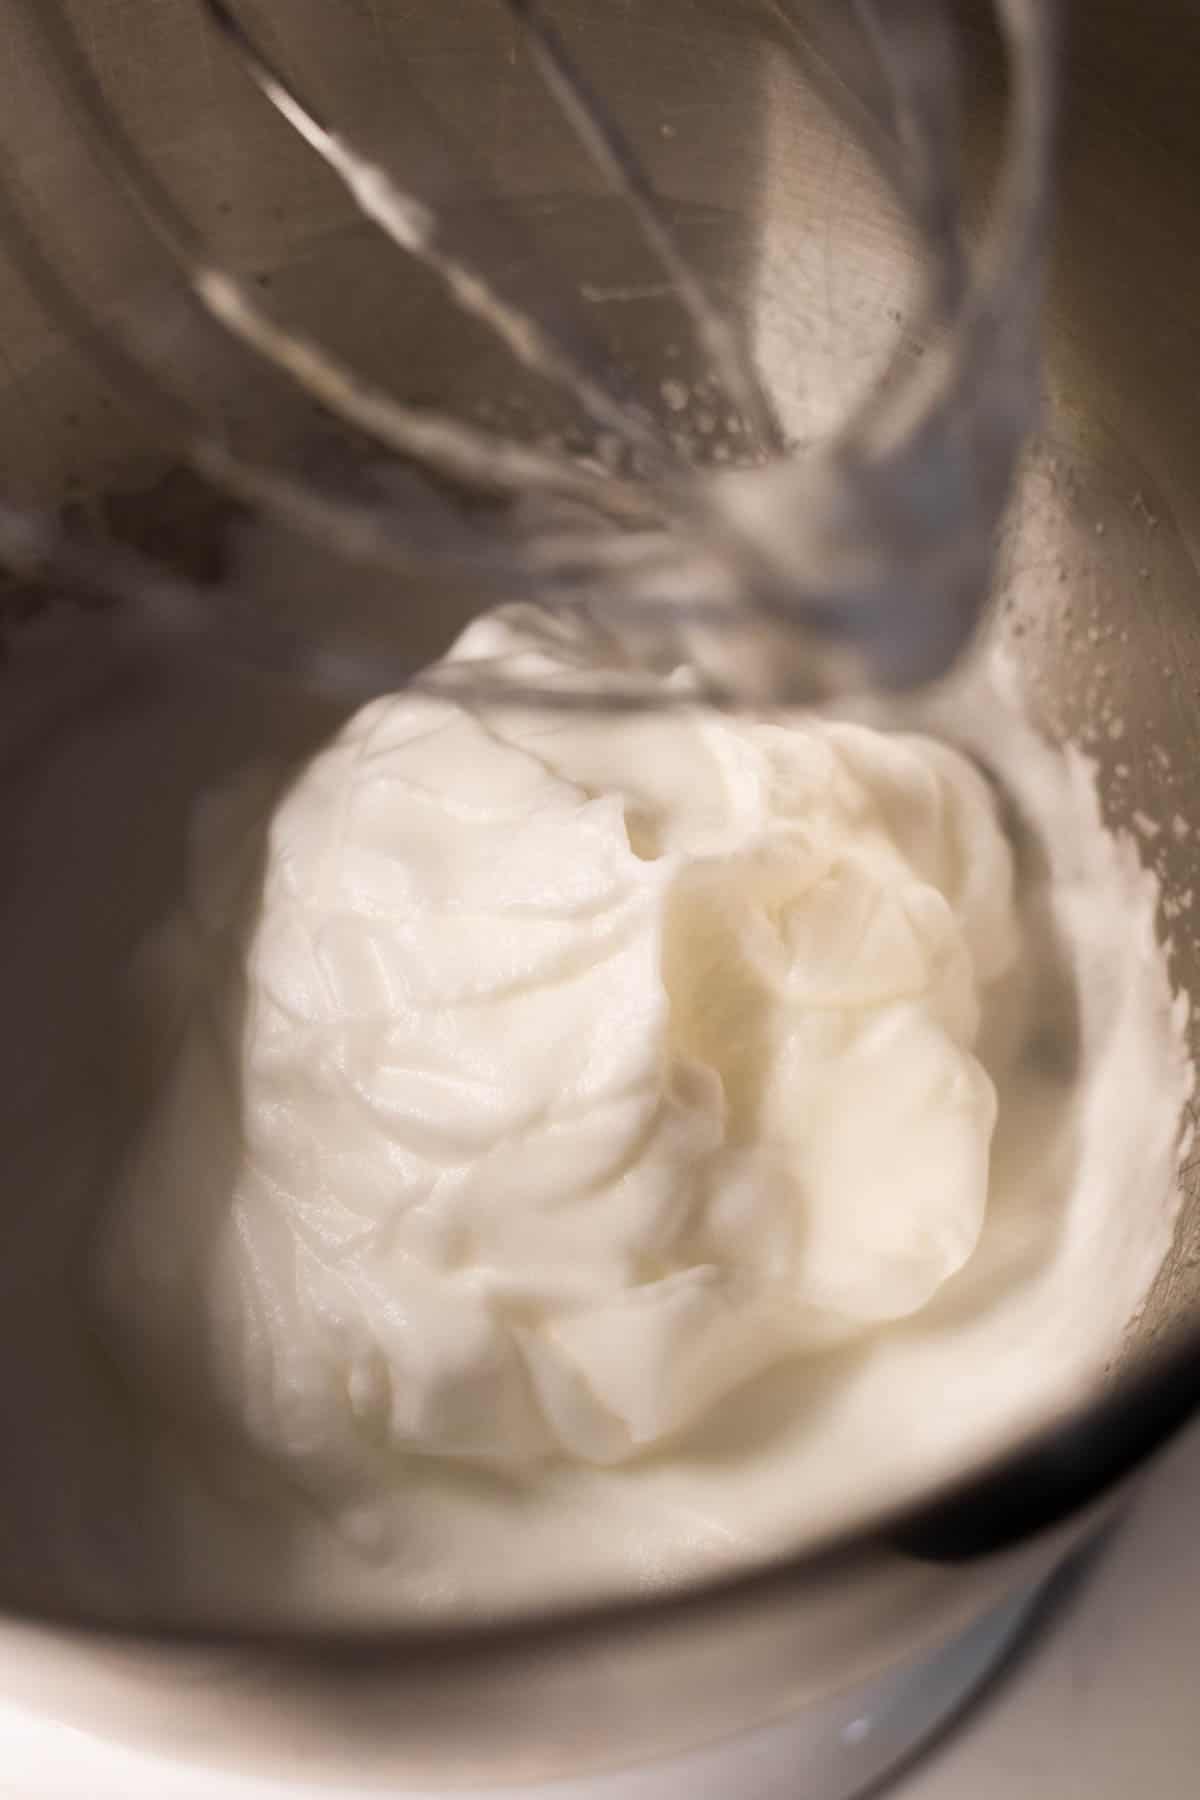 Beaten egg whites in a mixing bowl.